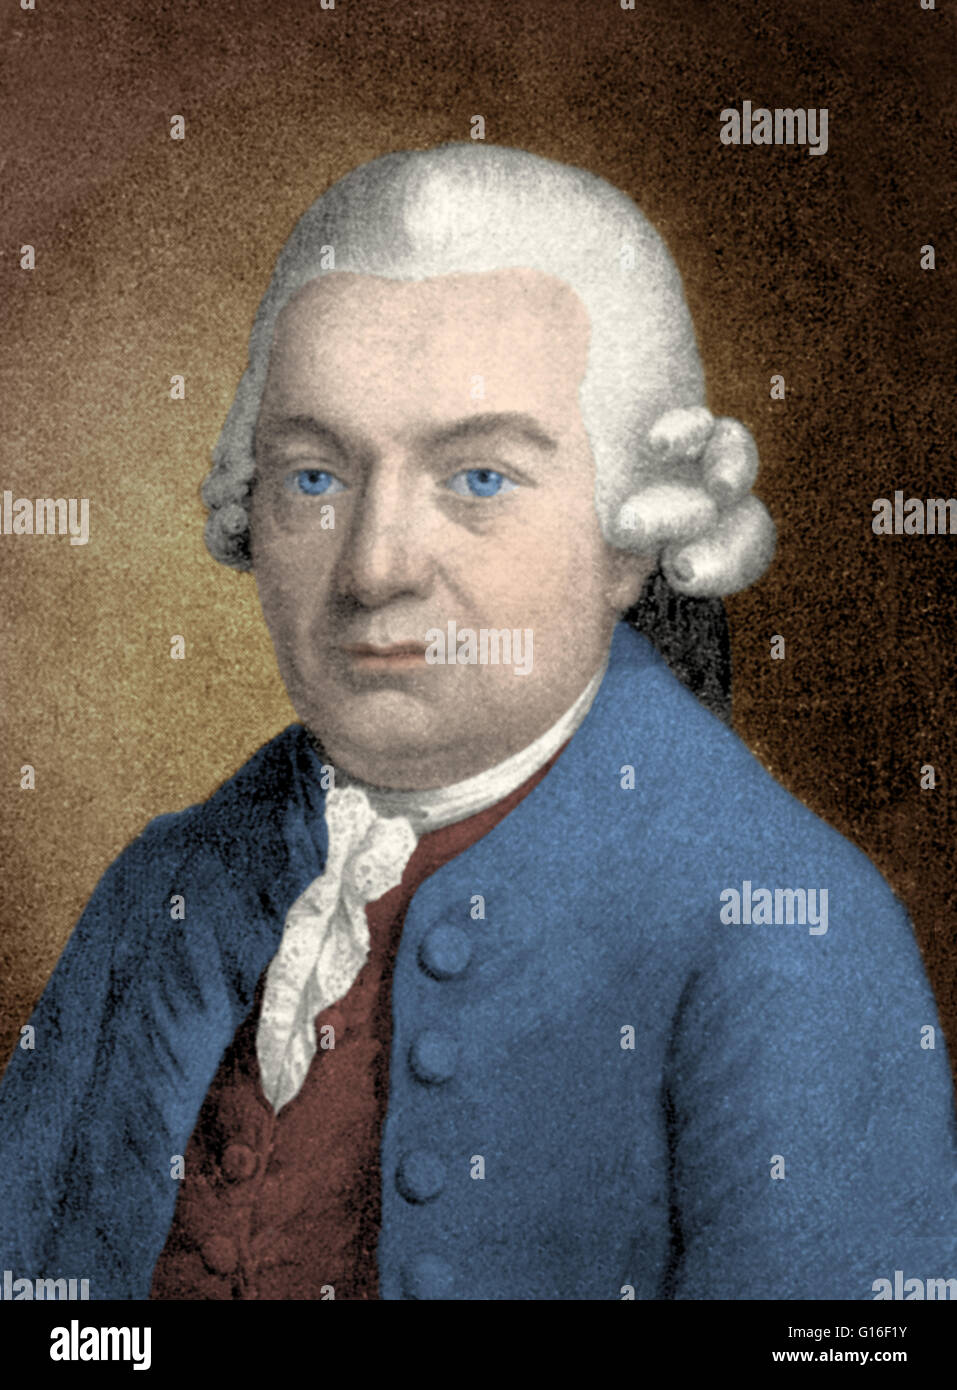 Johann Sebastian Bach as a Protestant composer and 'The Fifth